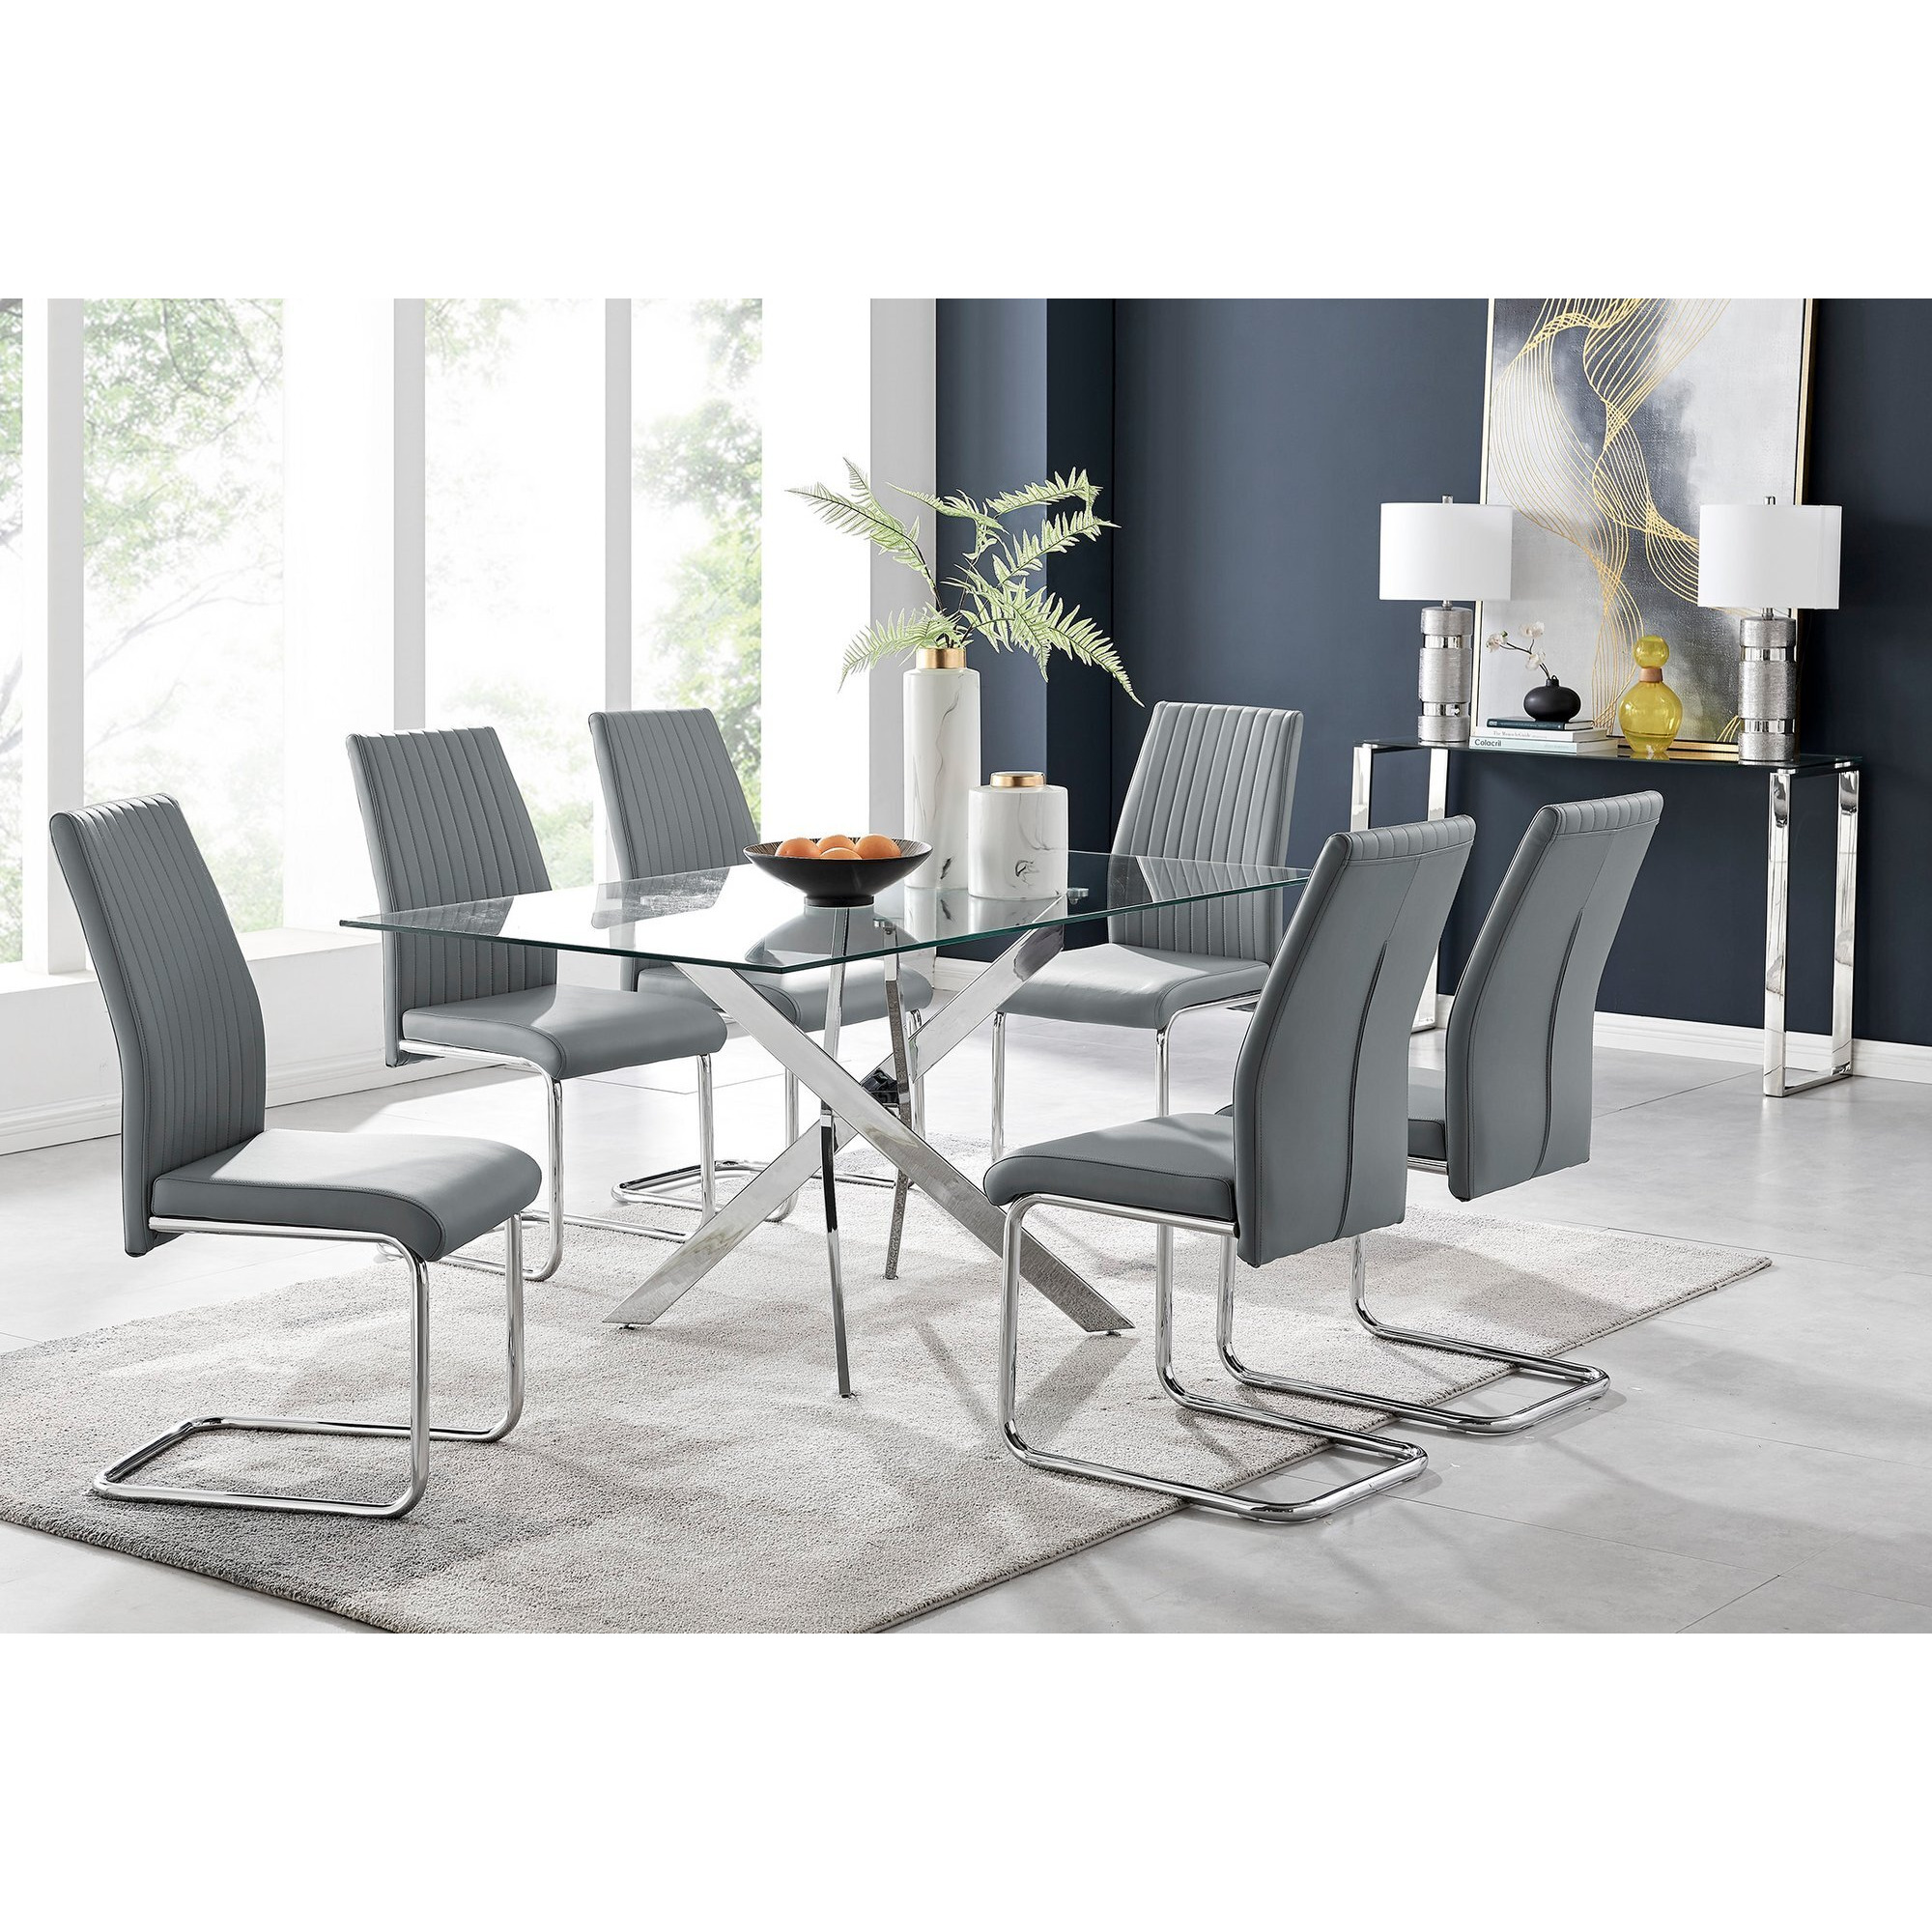 Leonardo Glass And Chrome Metal Dining Table And 6 Lorenzo Chairs